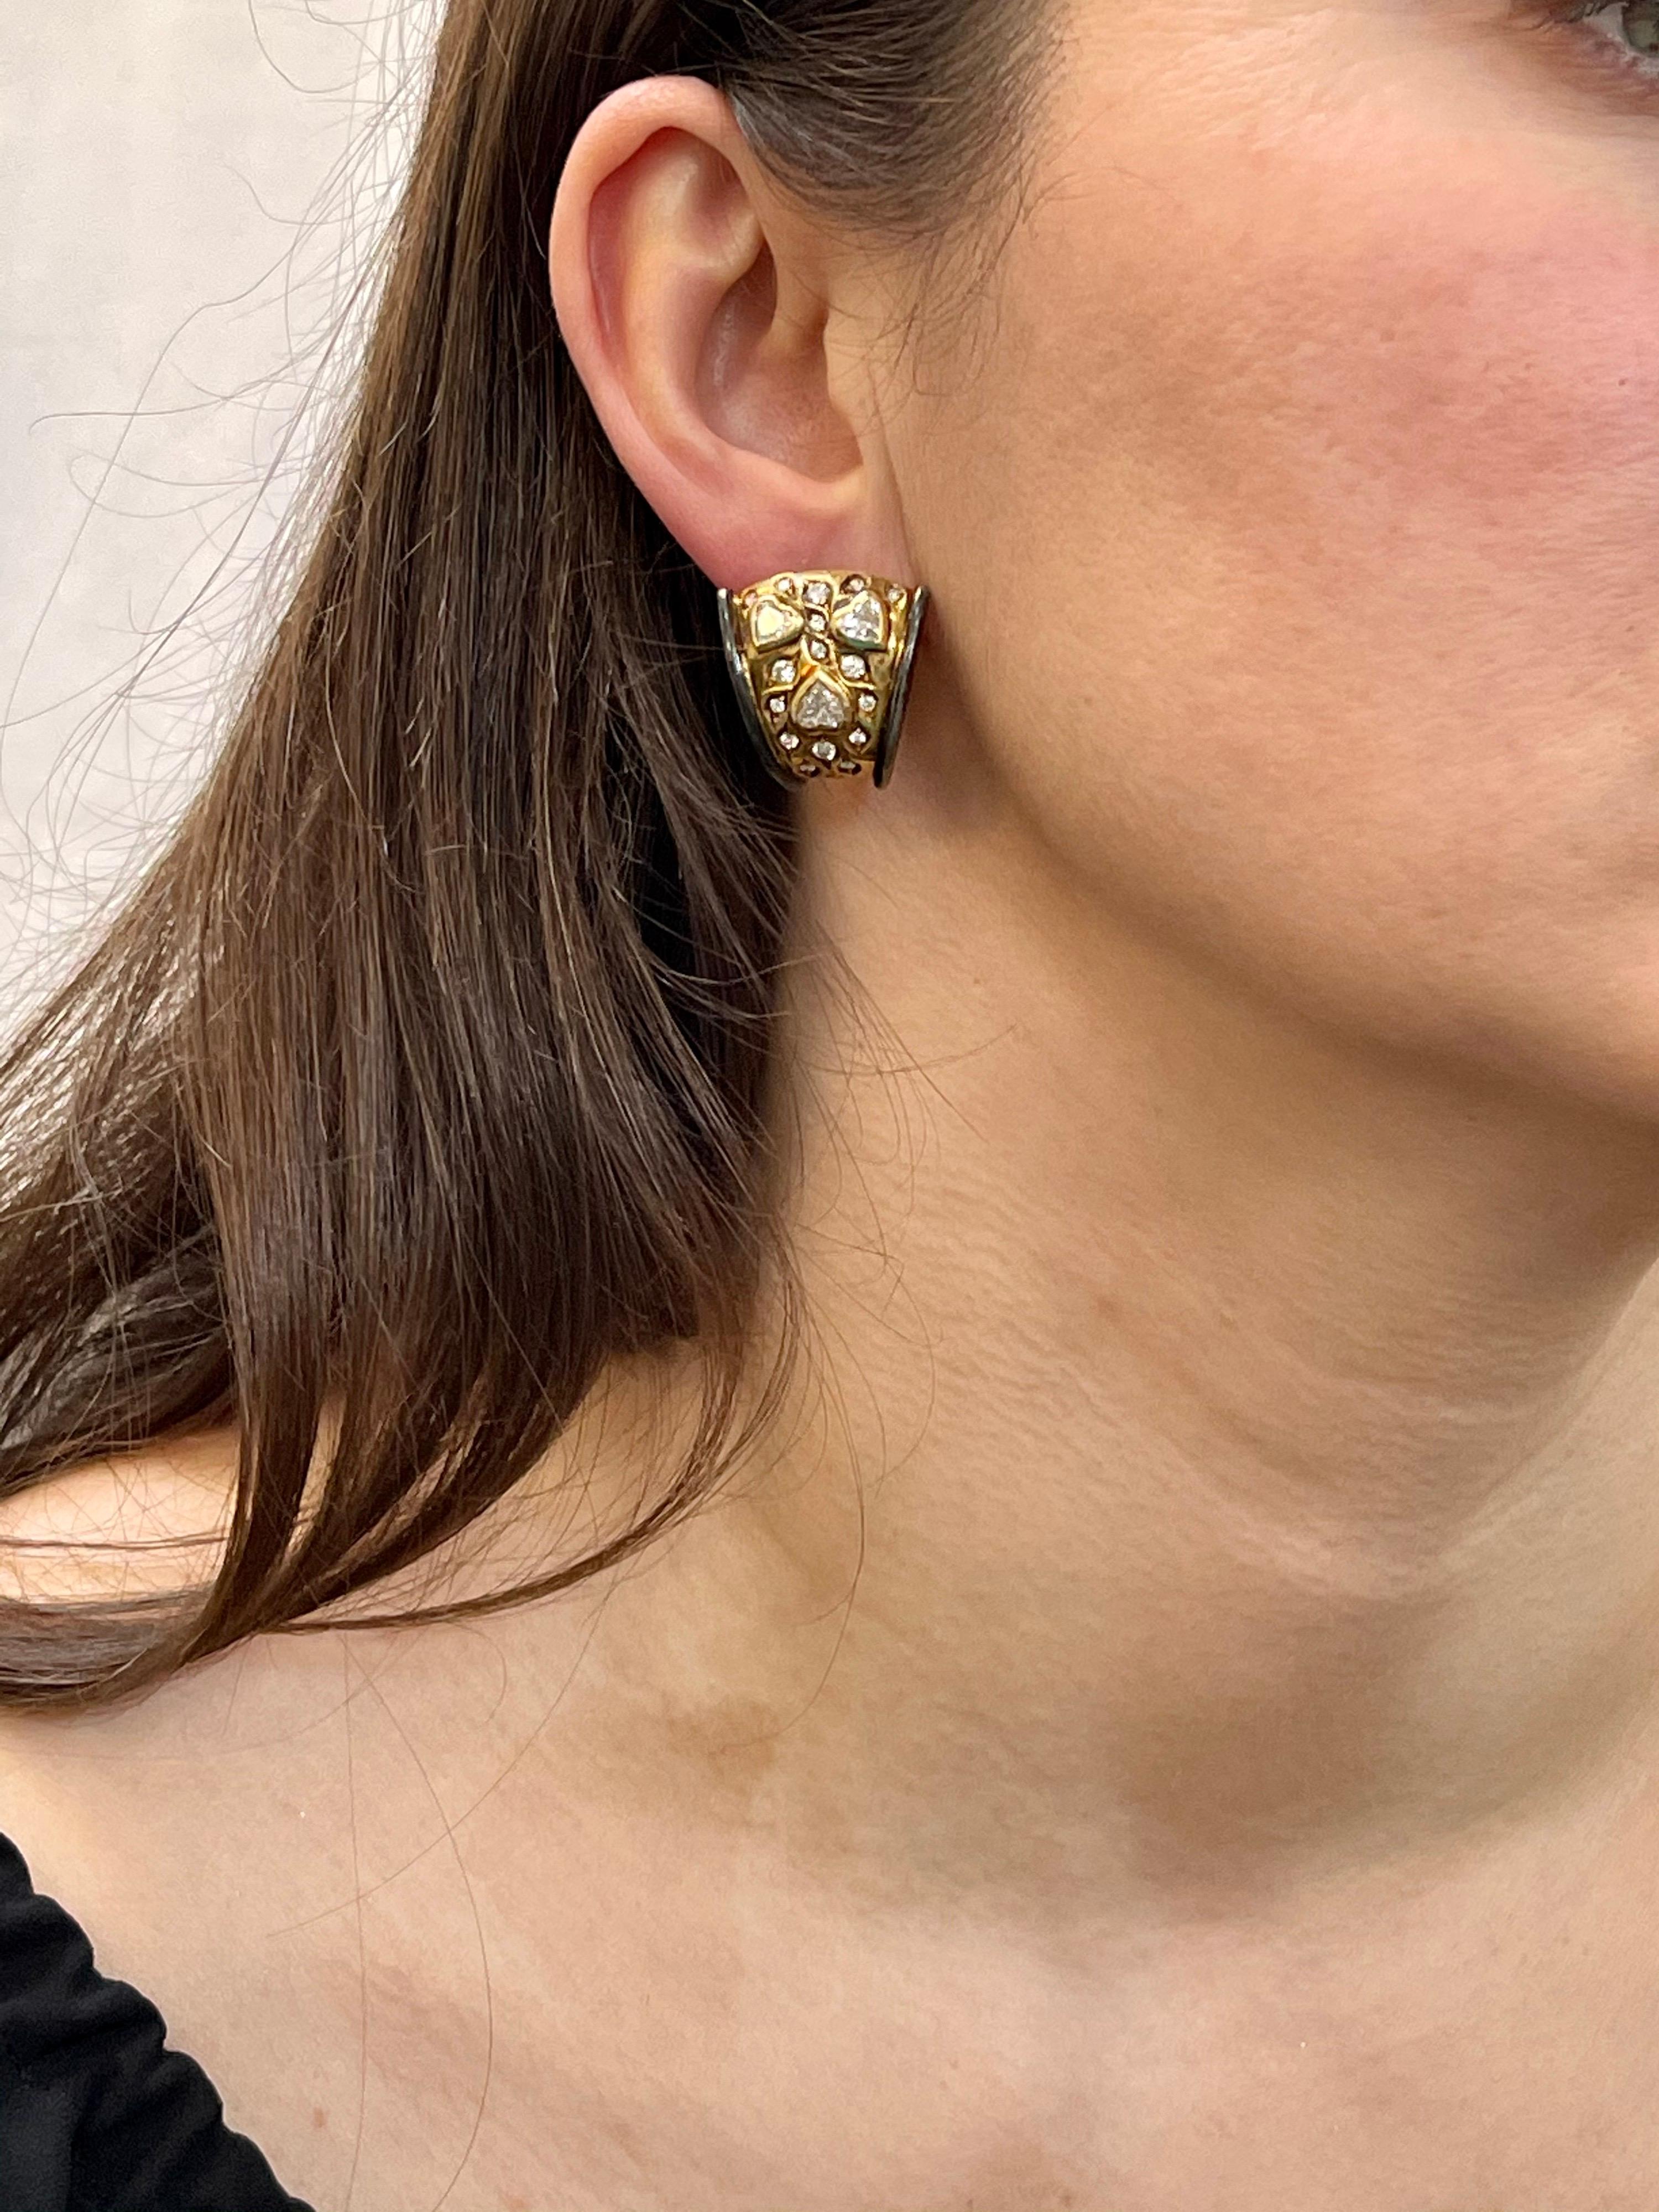 Leporttie Diamond Bangle Ring Earring Three-Piece Set in 18 Karat Yellow Gold For Sale 13